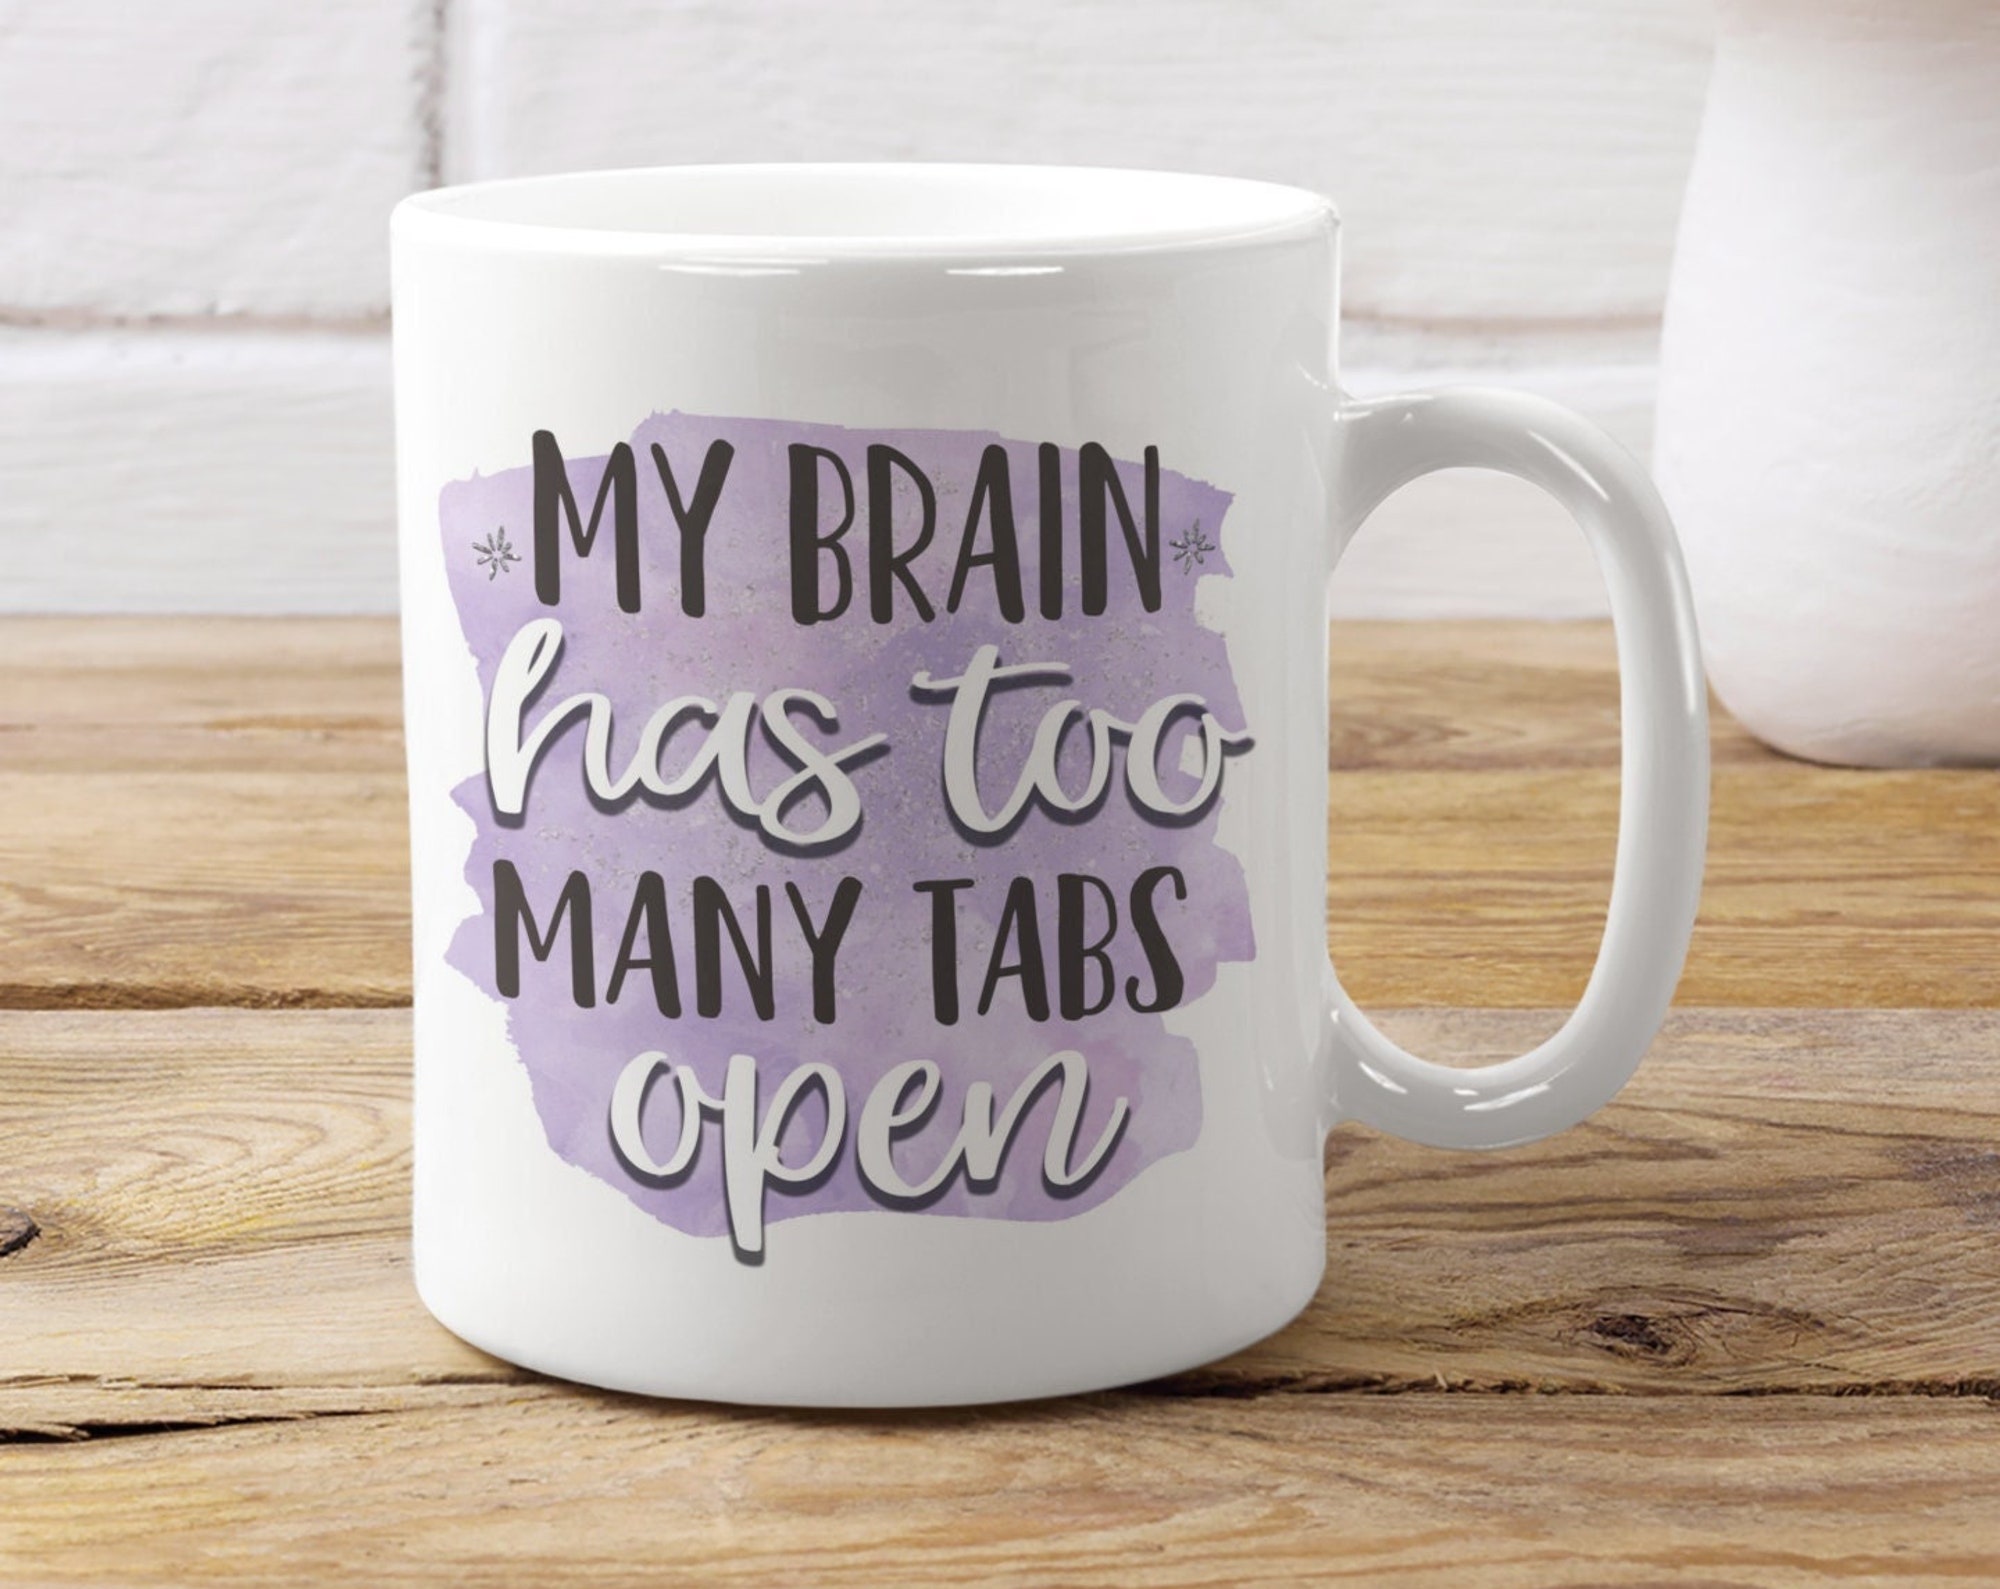 My brain has too many Mug